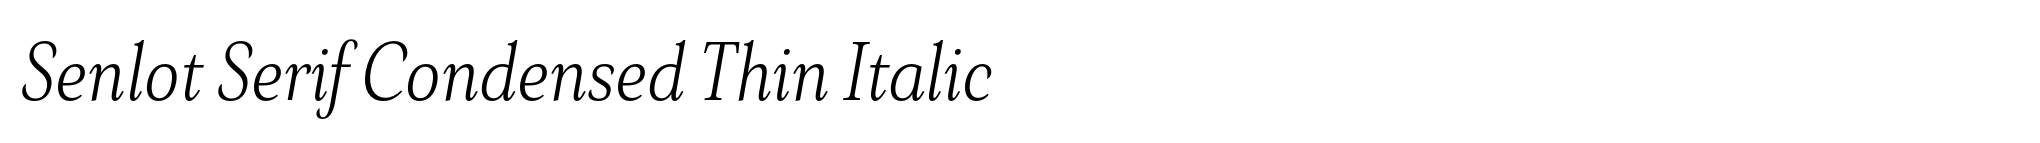 Senlot Serif Condensed Thin Italic image